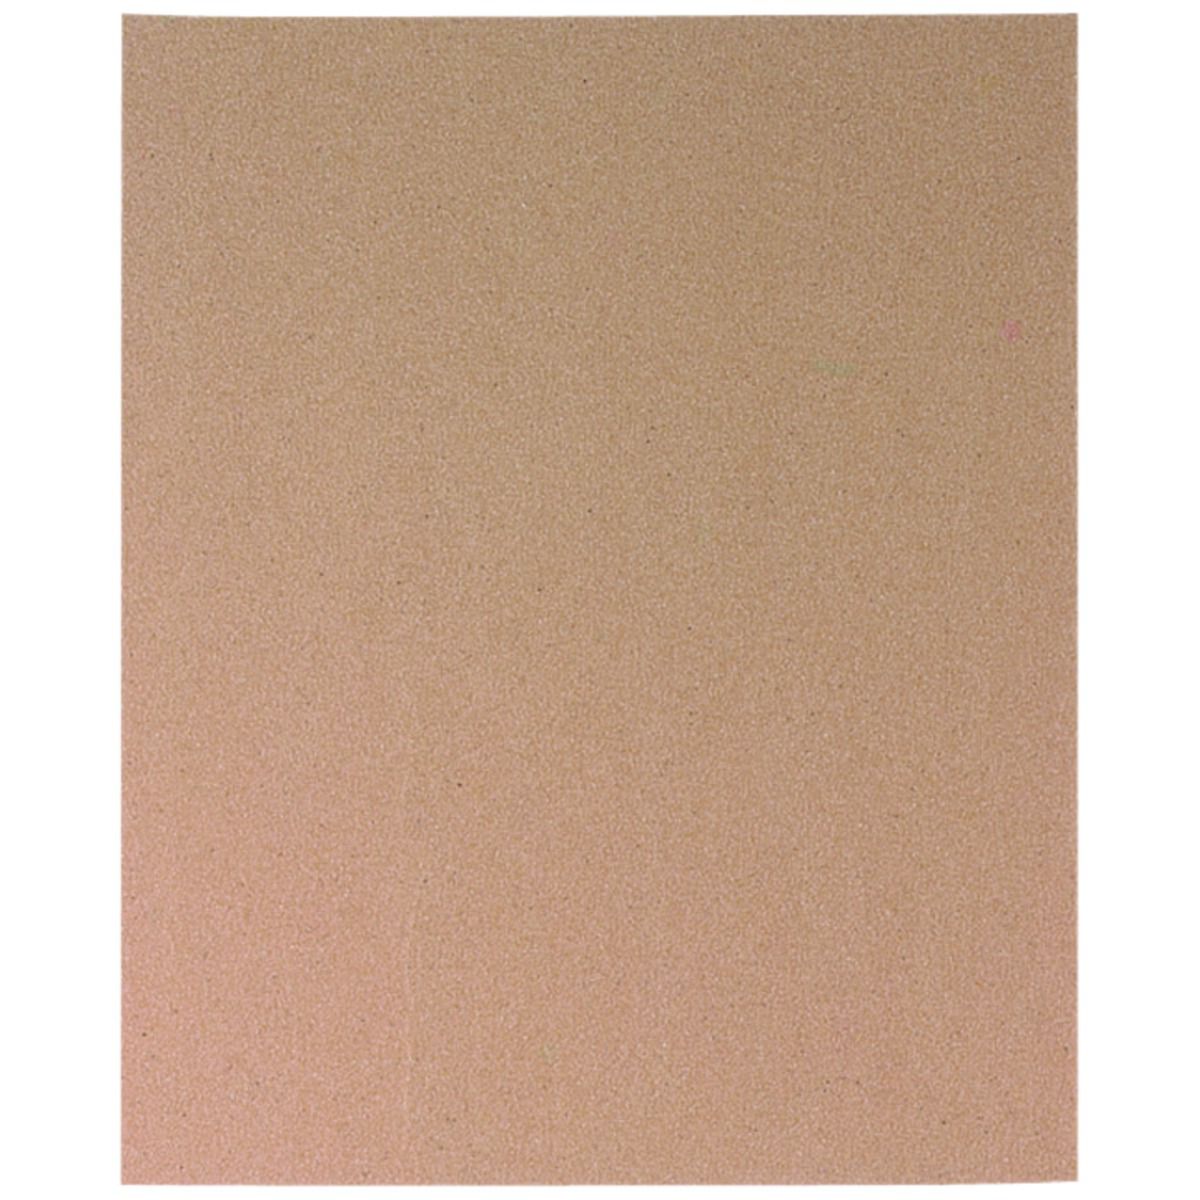 Image of Wickes General Purpose Coarse Sandpaper - Pack of 5